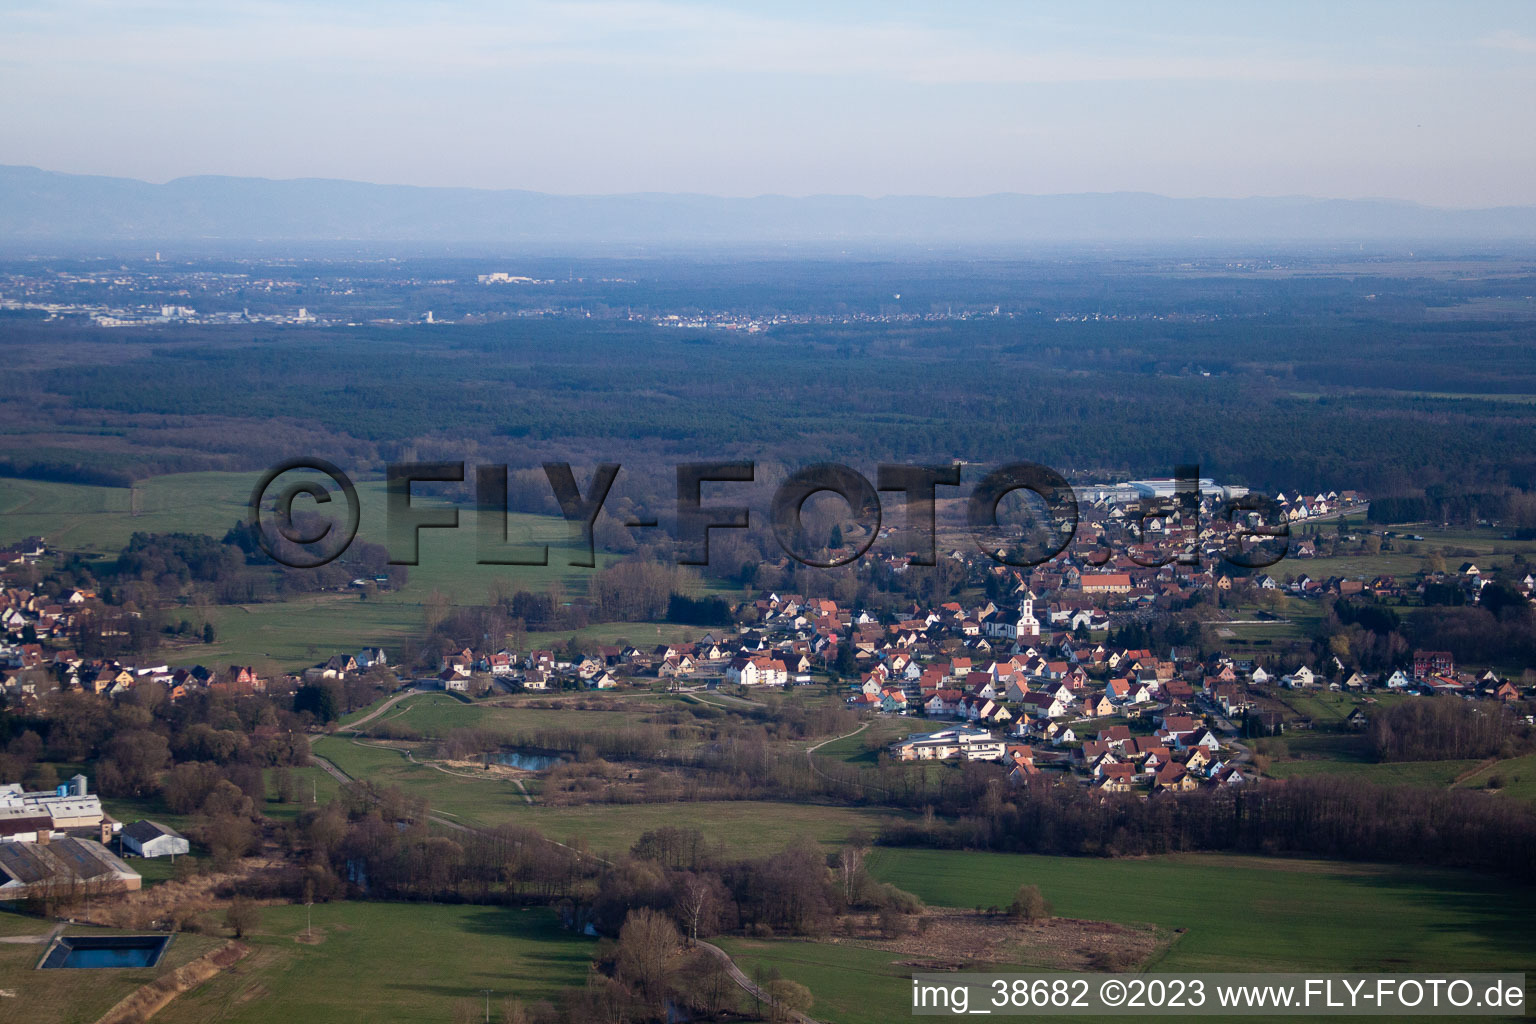 Uttenhoffen in the state Bas-Rhin, France seen from a drone